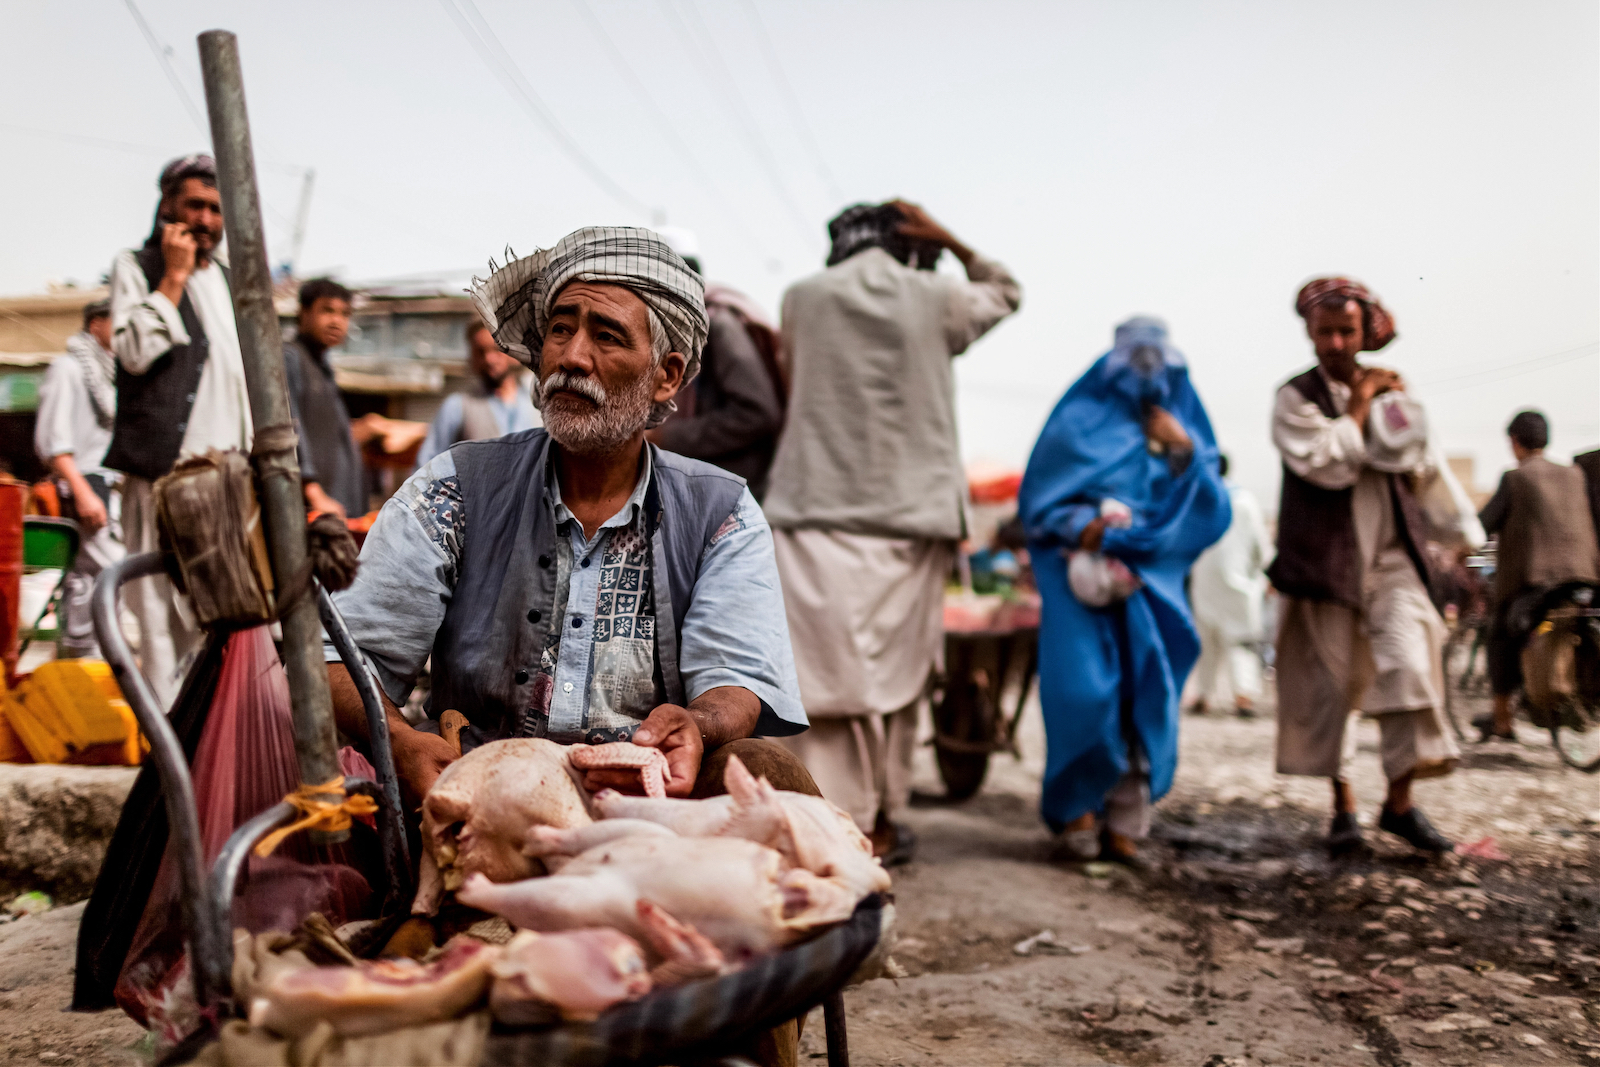 Market in Mazar-i-Sharf, Afghanistan